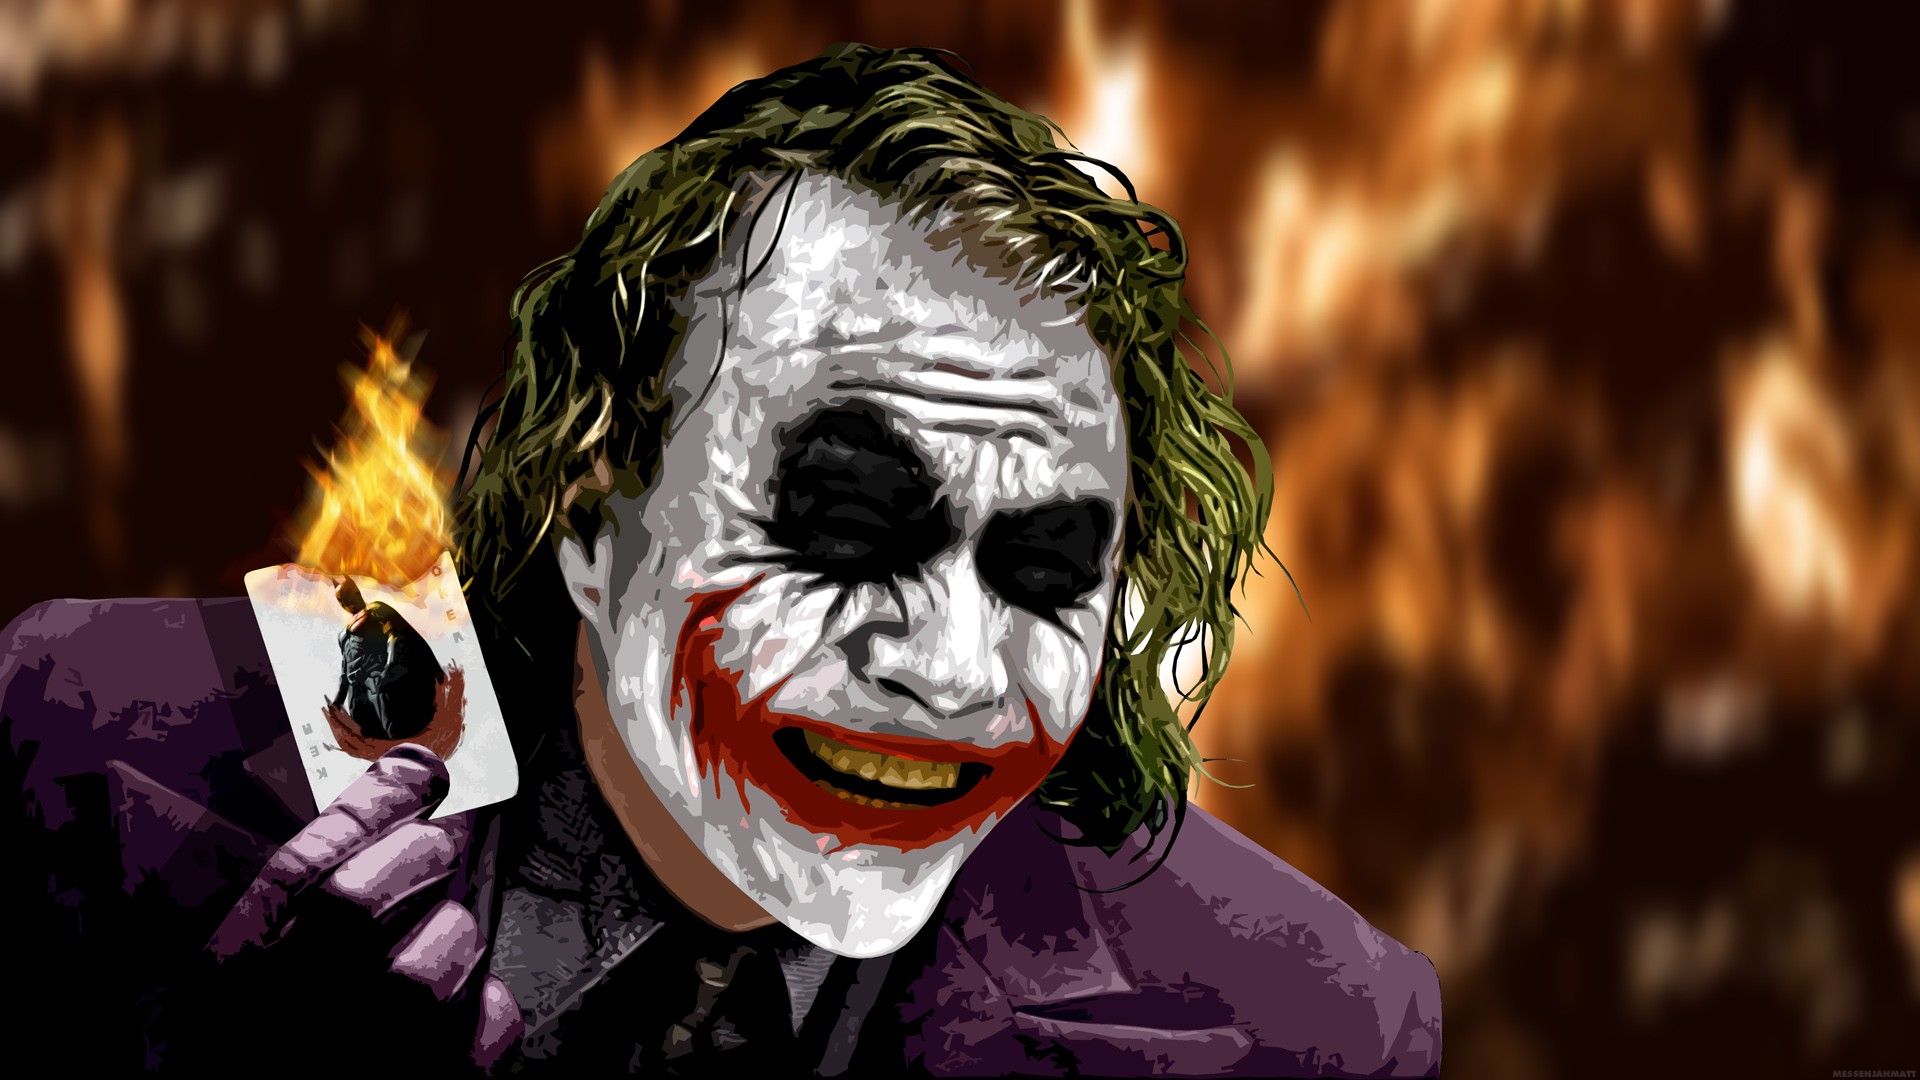 General 1920x1080 Joker MessenjahMatt cards fire The Dark Knight Batman movies deceased Heath Ledger actor DC Comics Christopher Nolan